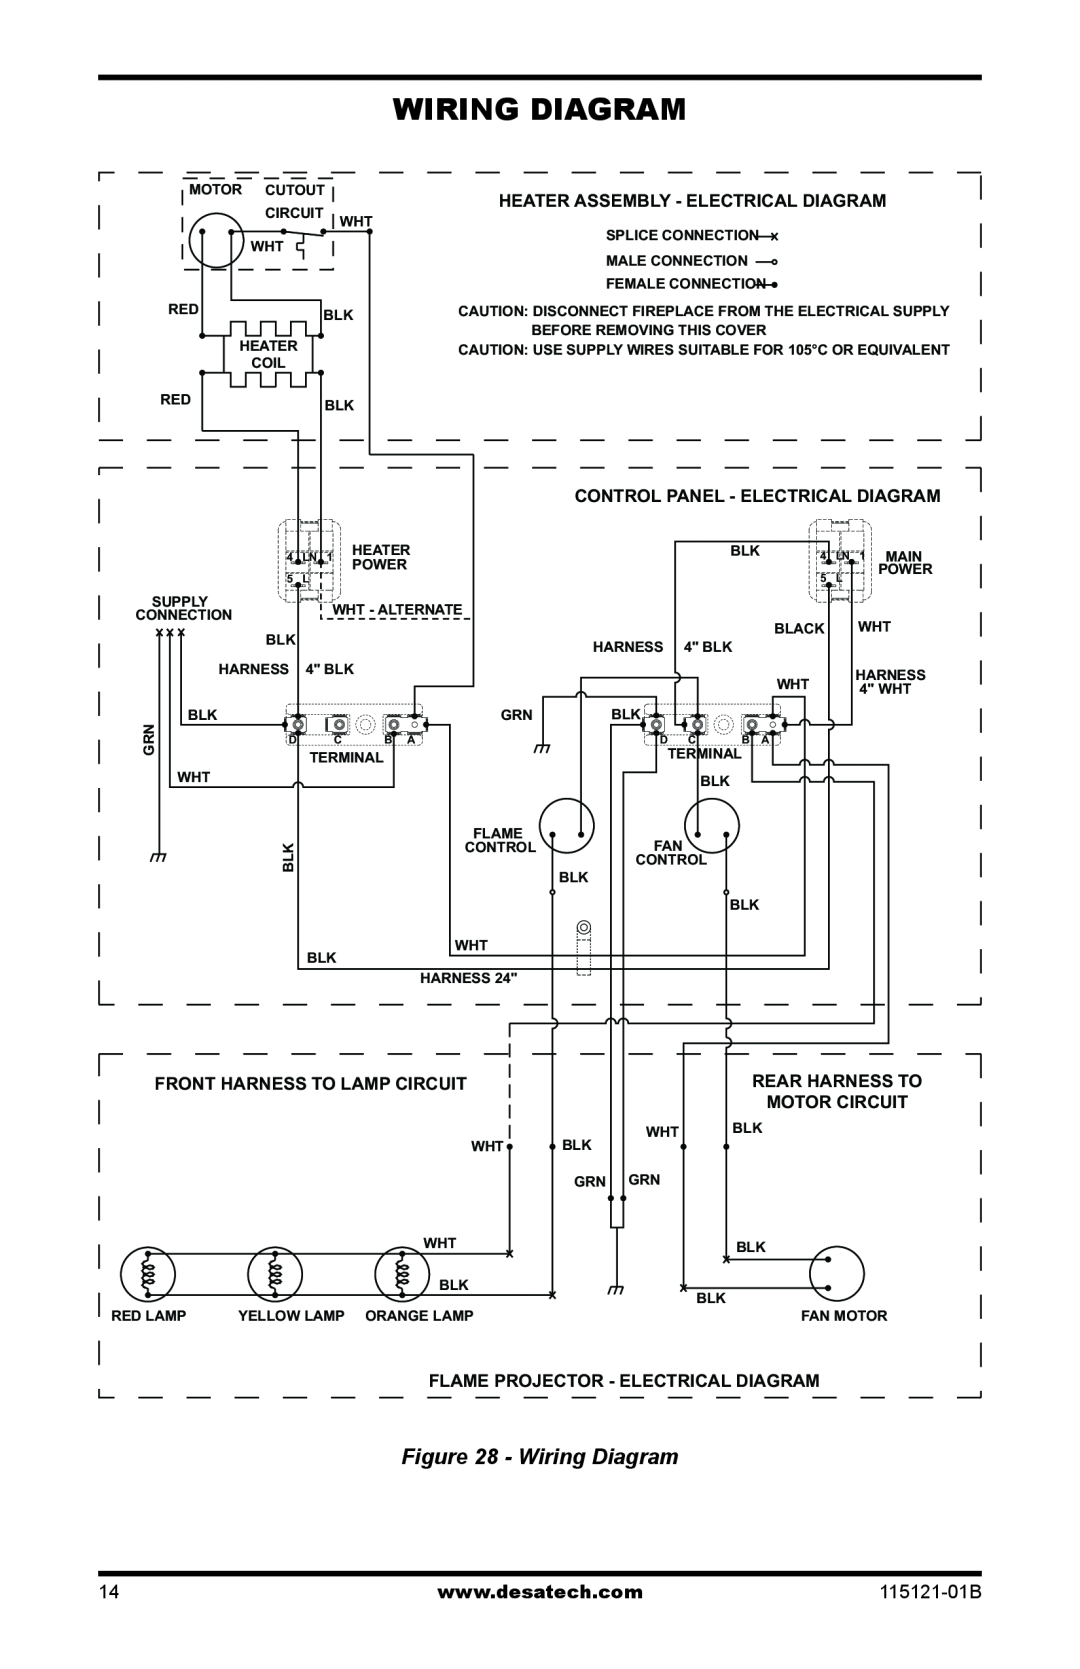 Vanguard VE32LBH, VE36LH, VE36LB Wiring Diagram, Heater Assembly - Electrical Diagram, Control Panel - Electrical Diagram 